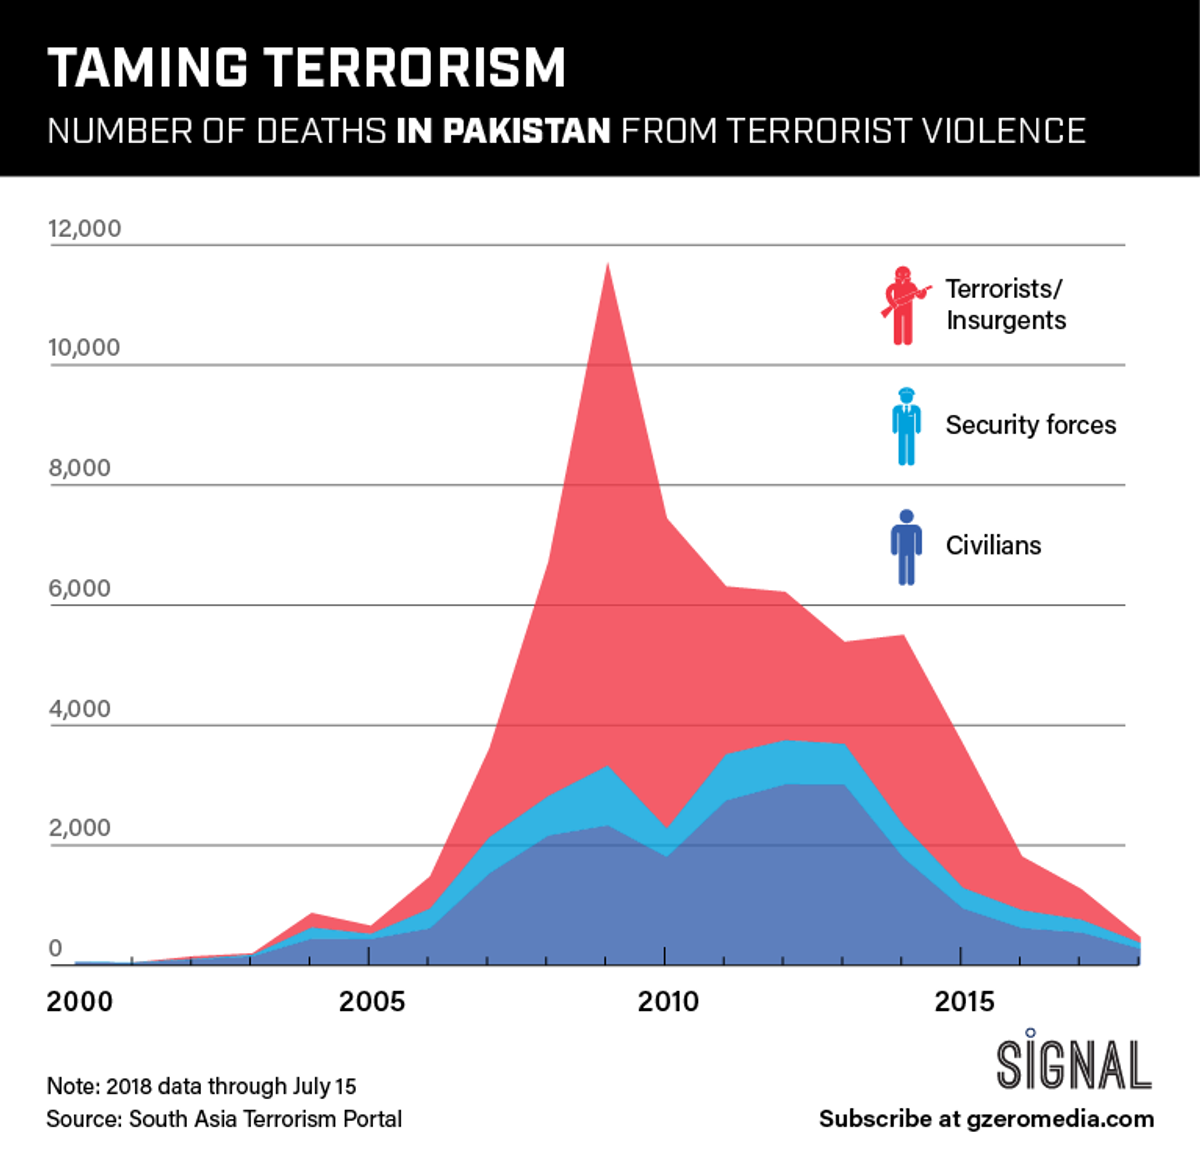 GRAPHIC TRUTH: TAMING TERRORISM